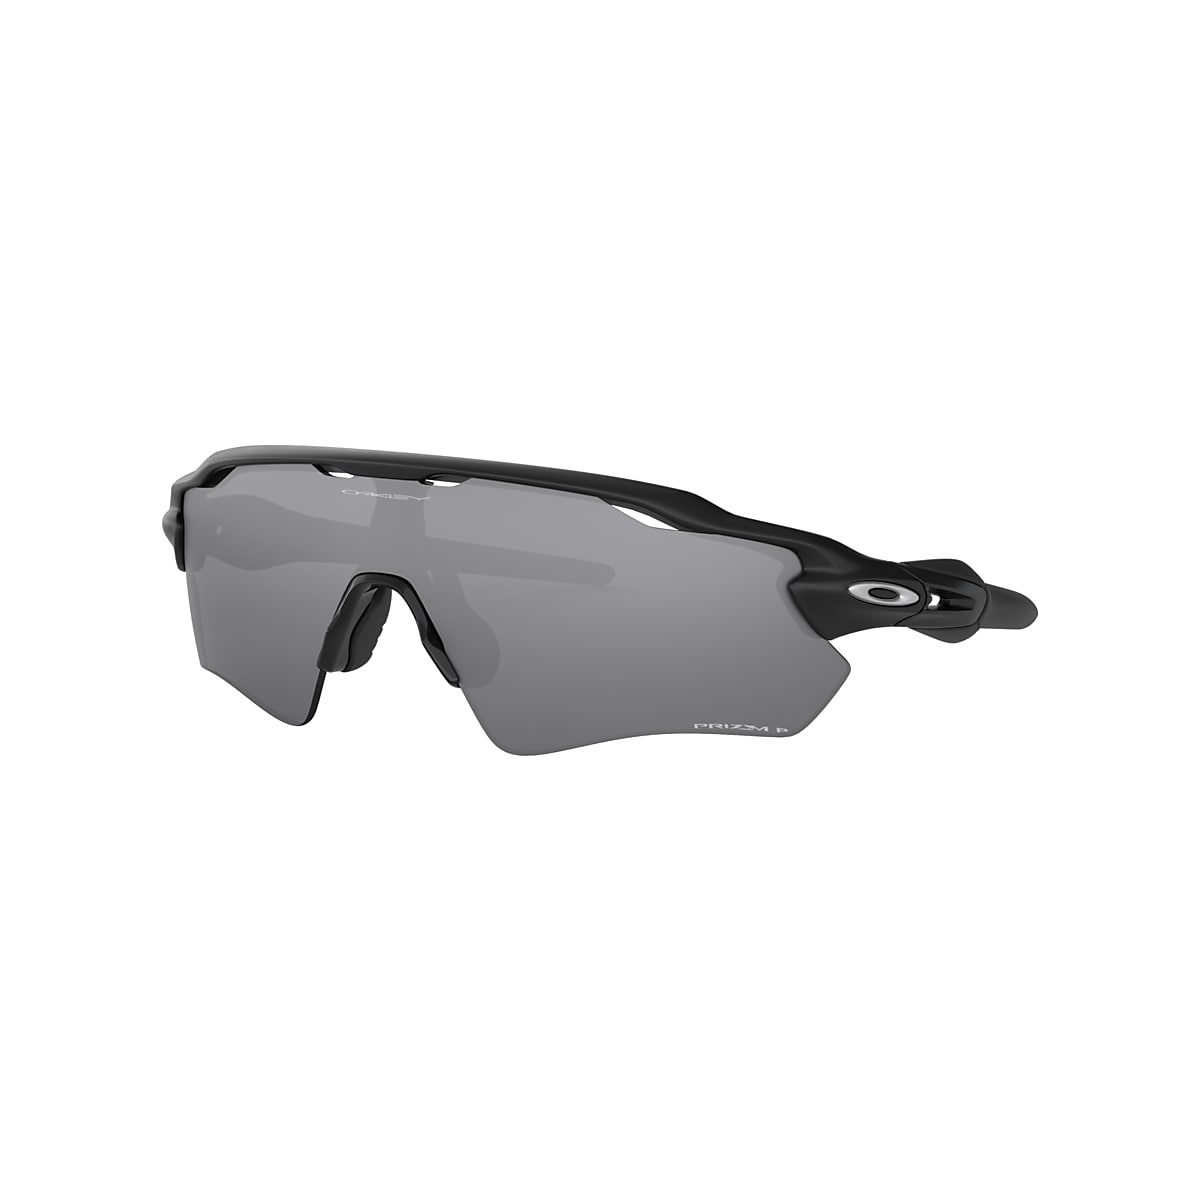 OAKLEY OO9208 Matte Black - Unisex Sunglasses, Prizm Black Polarized Lens